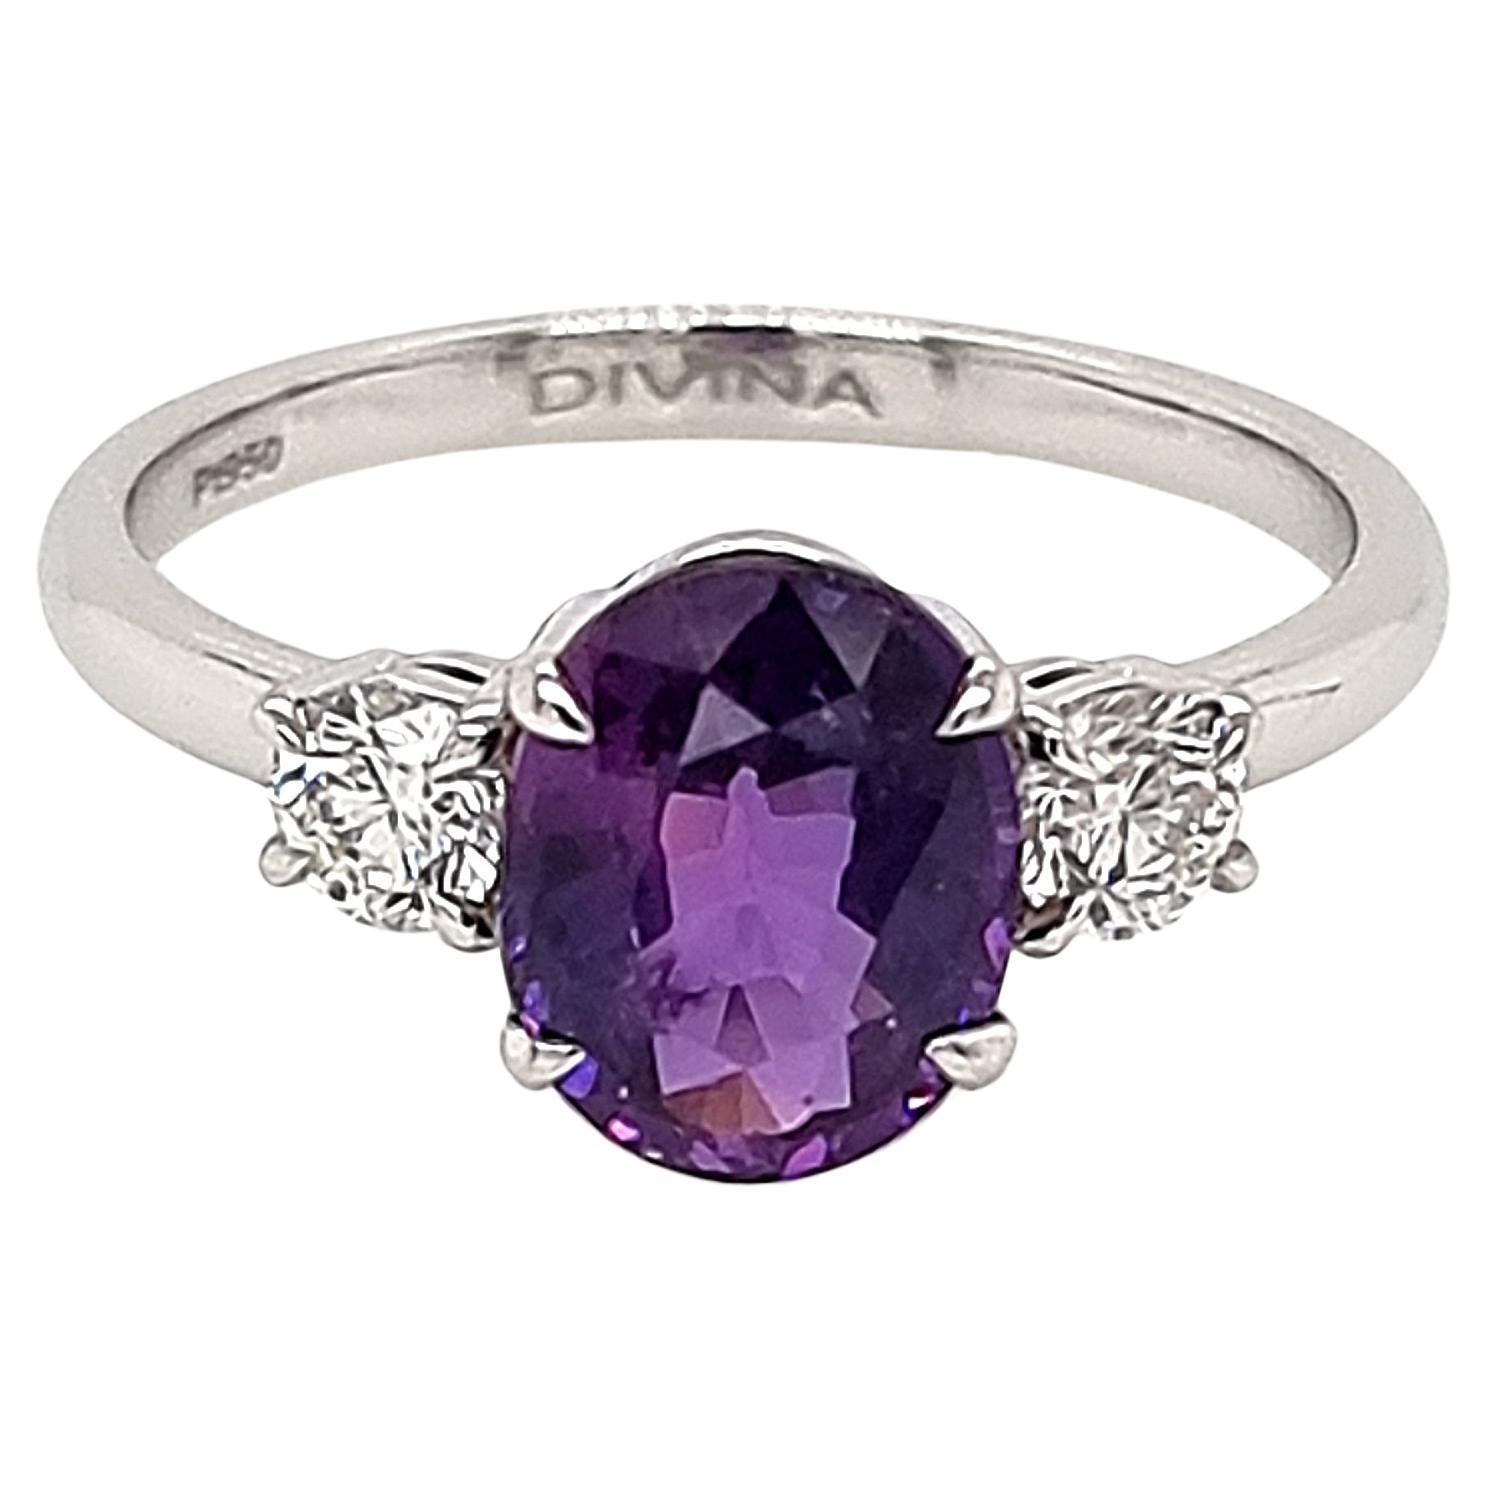 Platinum Ring with 15 Pointer Diamonds and Oval Purple Sri Lankan Sapphire